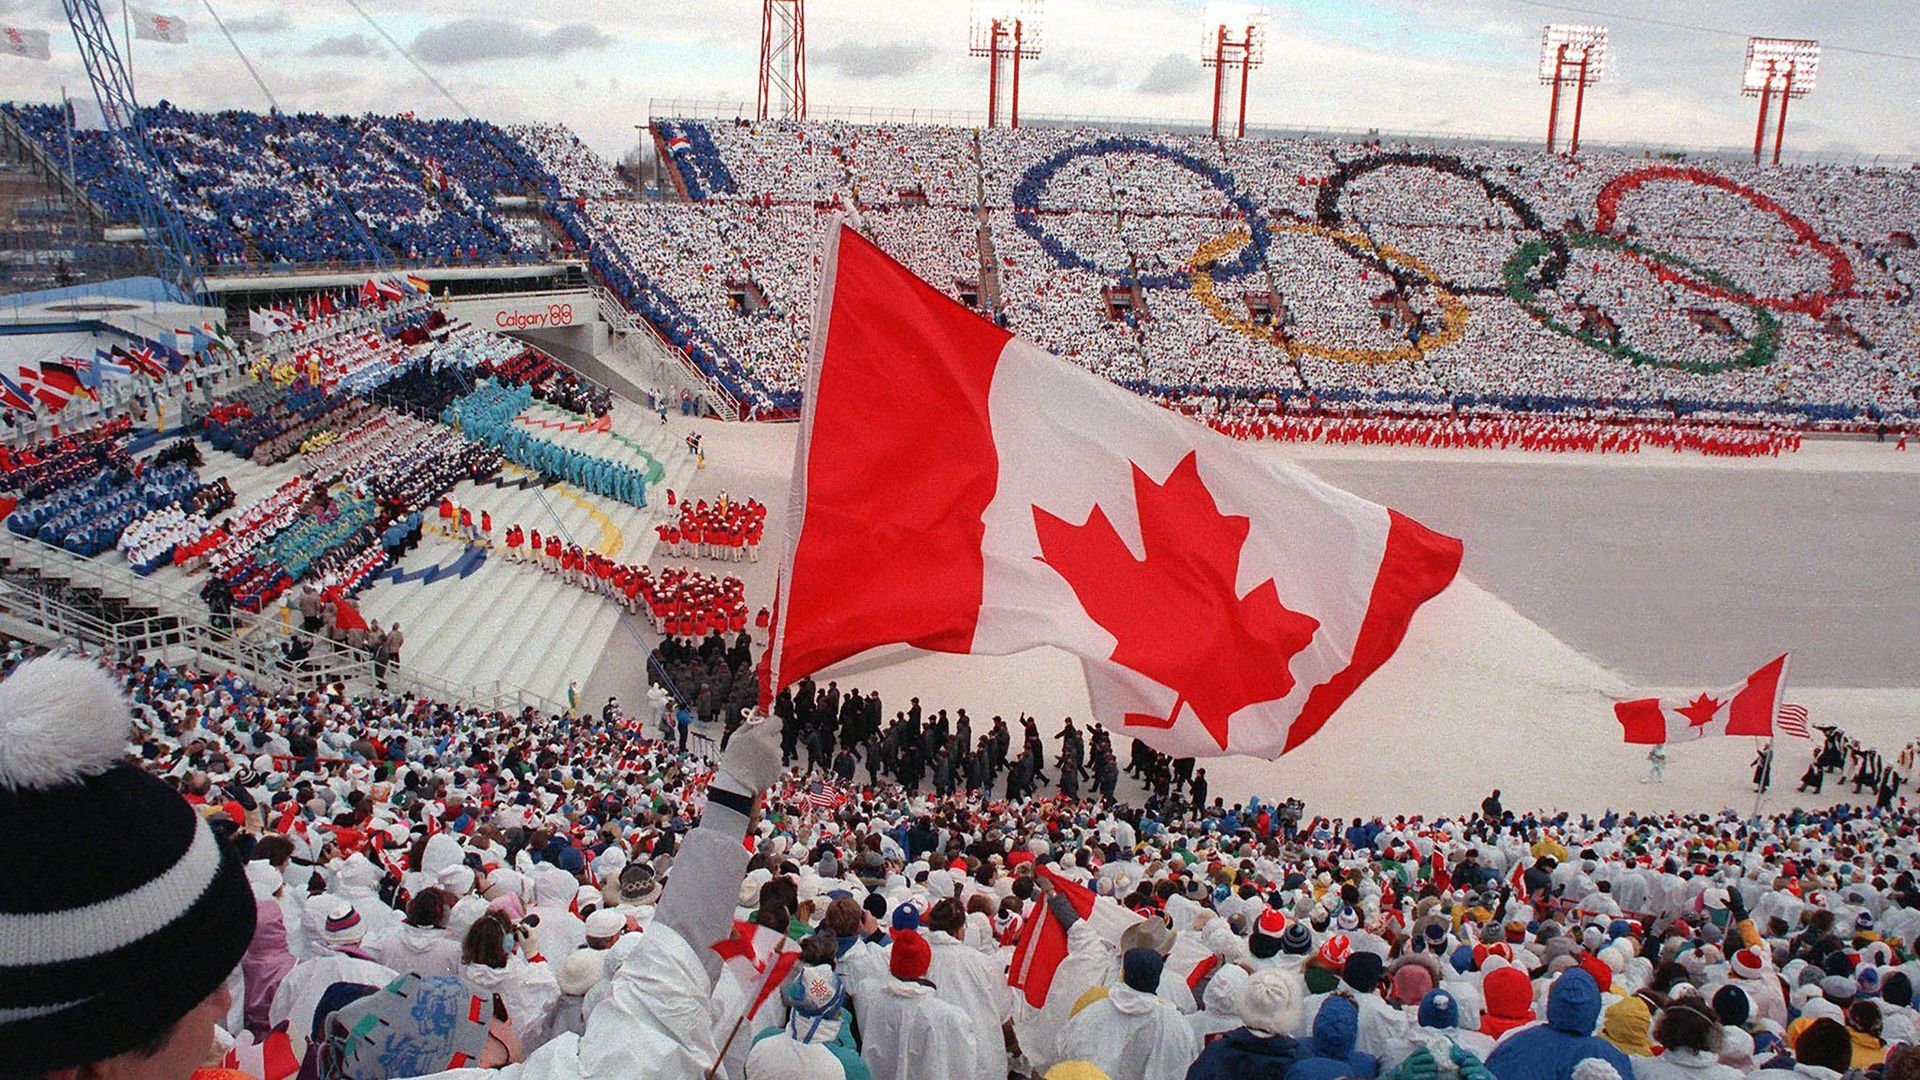 Calgary '88: 16 Days of Glory background